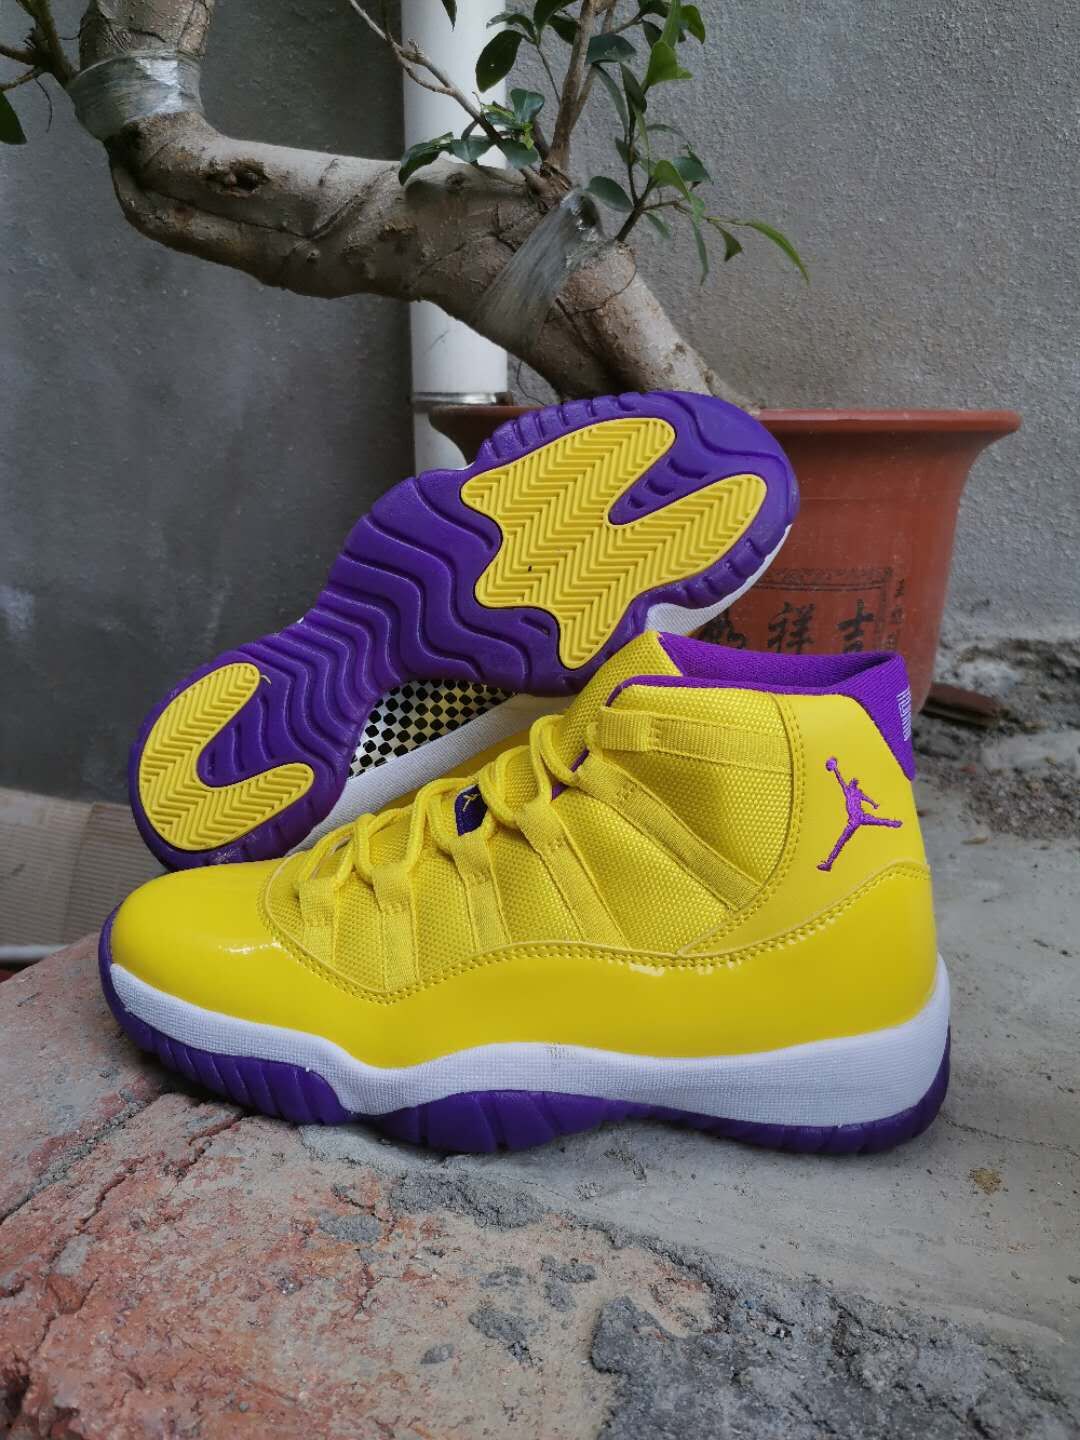 2020 Air Jordan 11 Kobe Yellow Purple Shoes - Click Image to Close